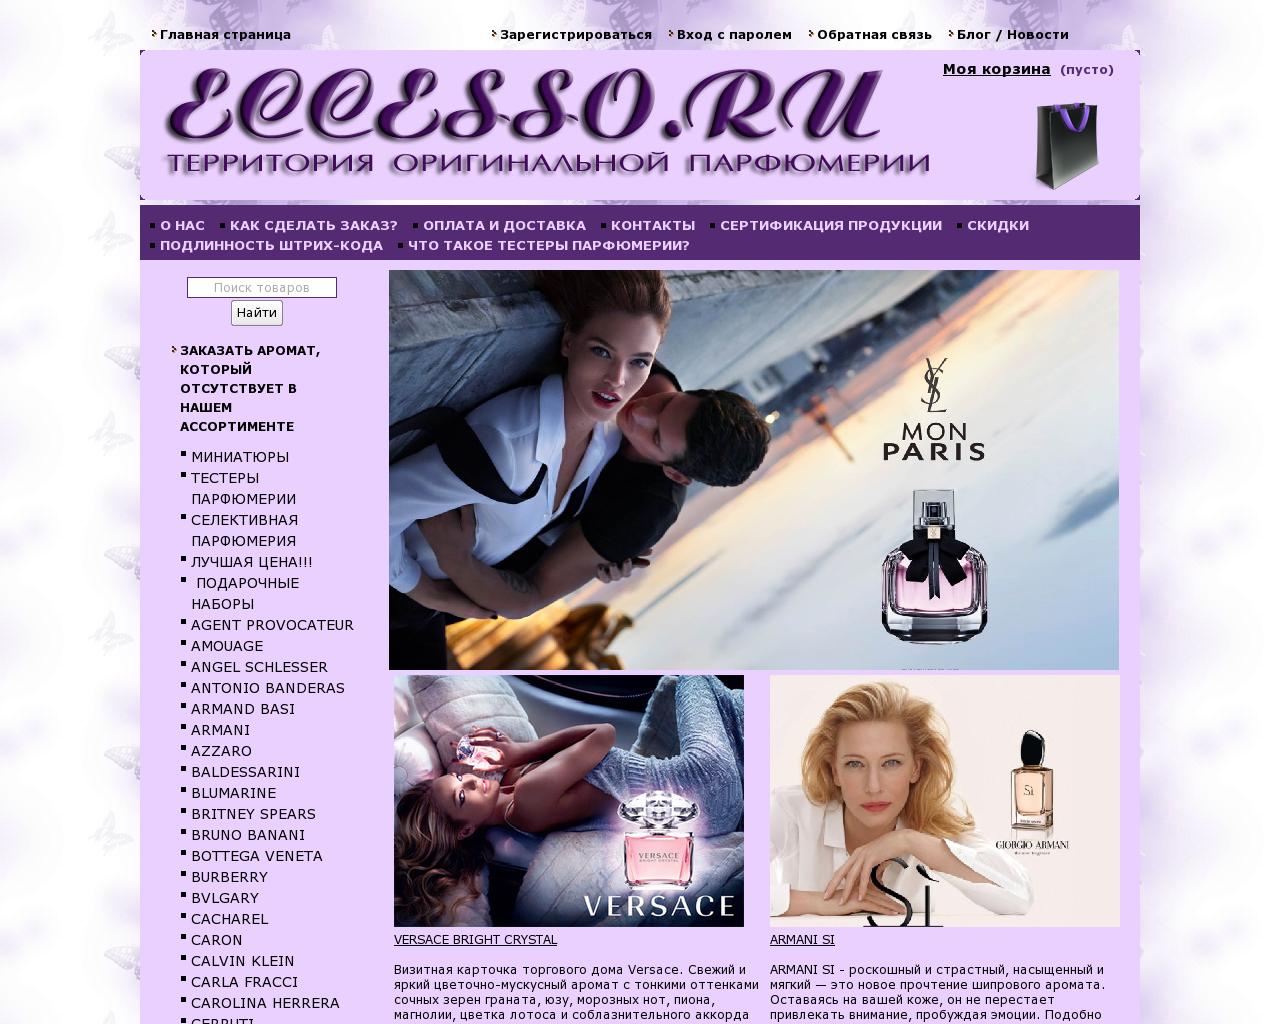 Изображение сайта eccesso.ru в разрешении 1280x1024